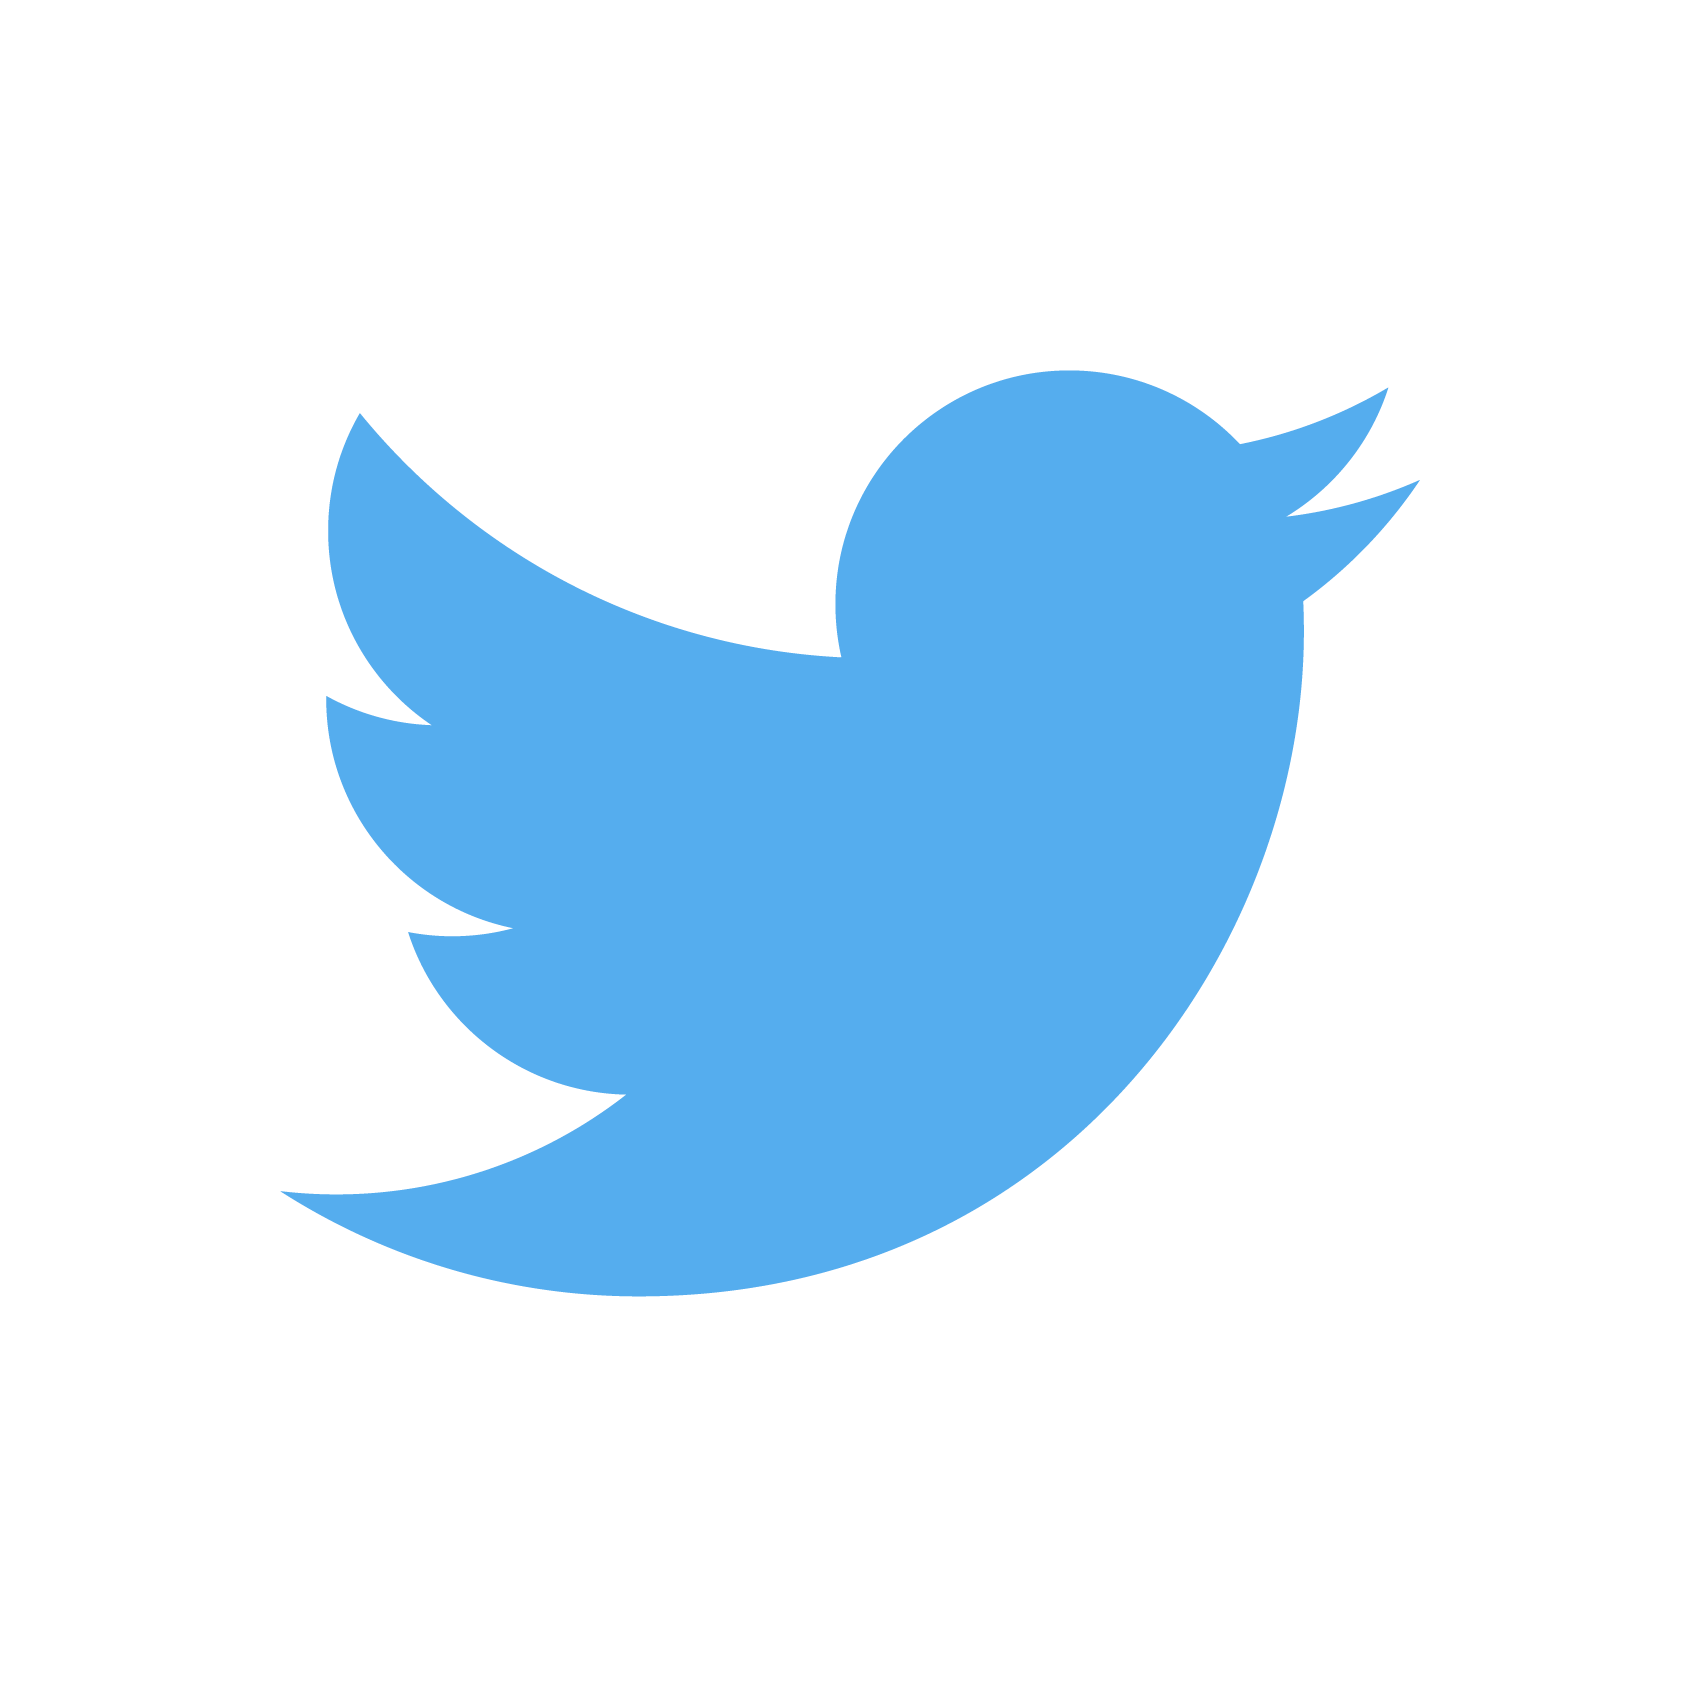 LeftMenuFooter/twitter logo.png